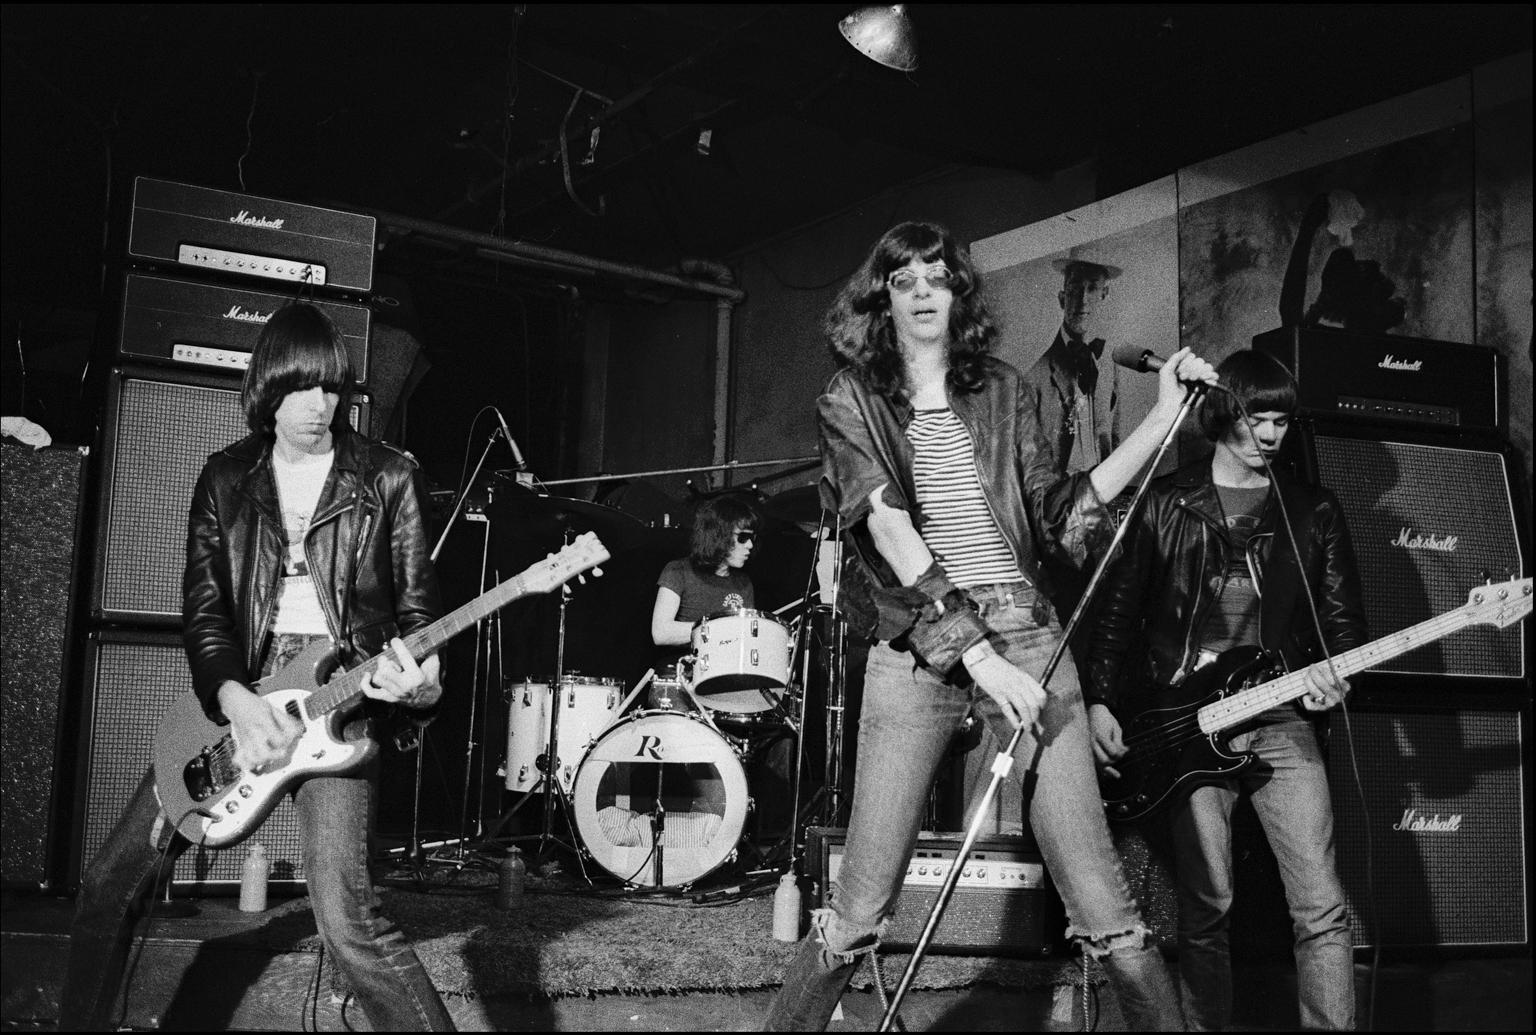 Allan Tannenbaum Black and White Photograph - The Ramones at CBGB - Archival Fine Art Limited Edition Black and White Print